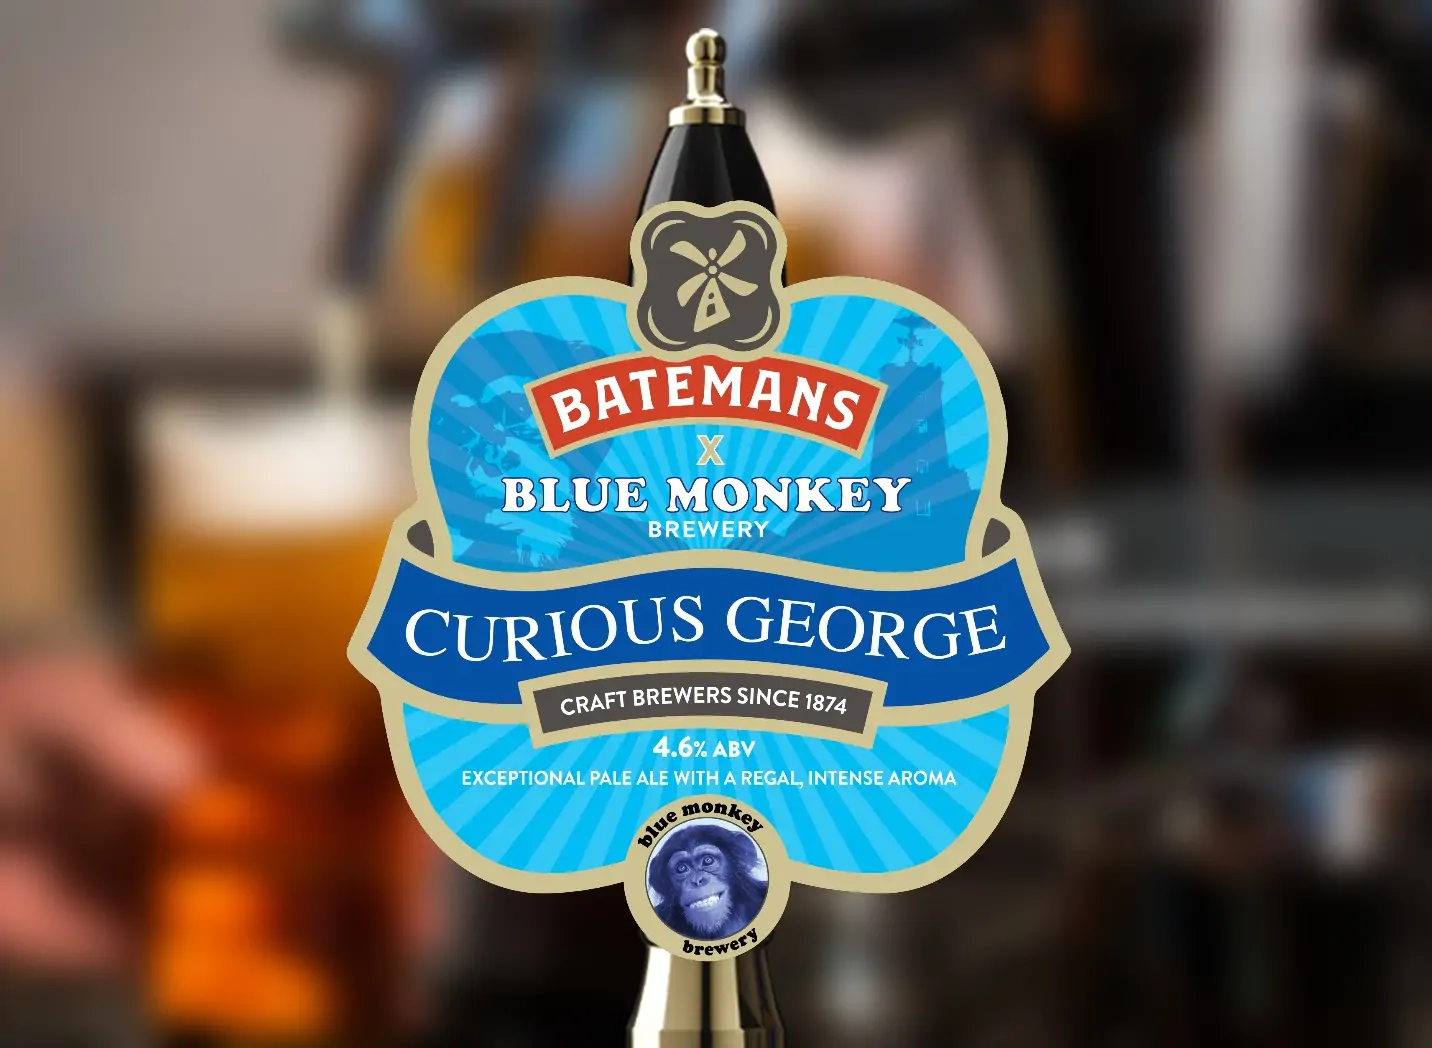 Batemans Brewery & Blue Monkey Brewery Collaboration Brew - Curious George